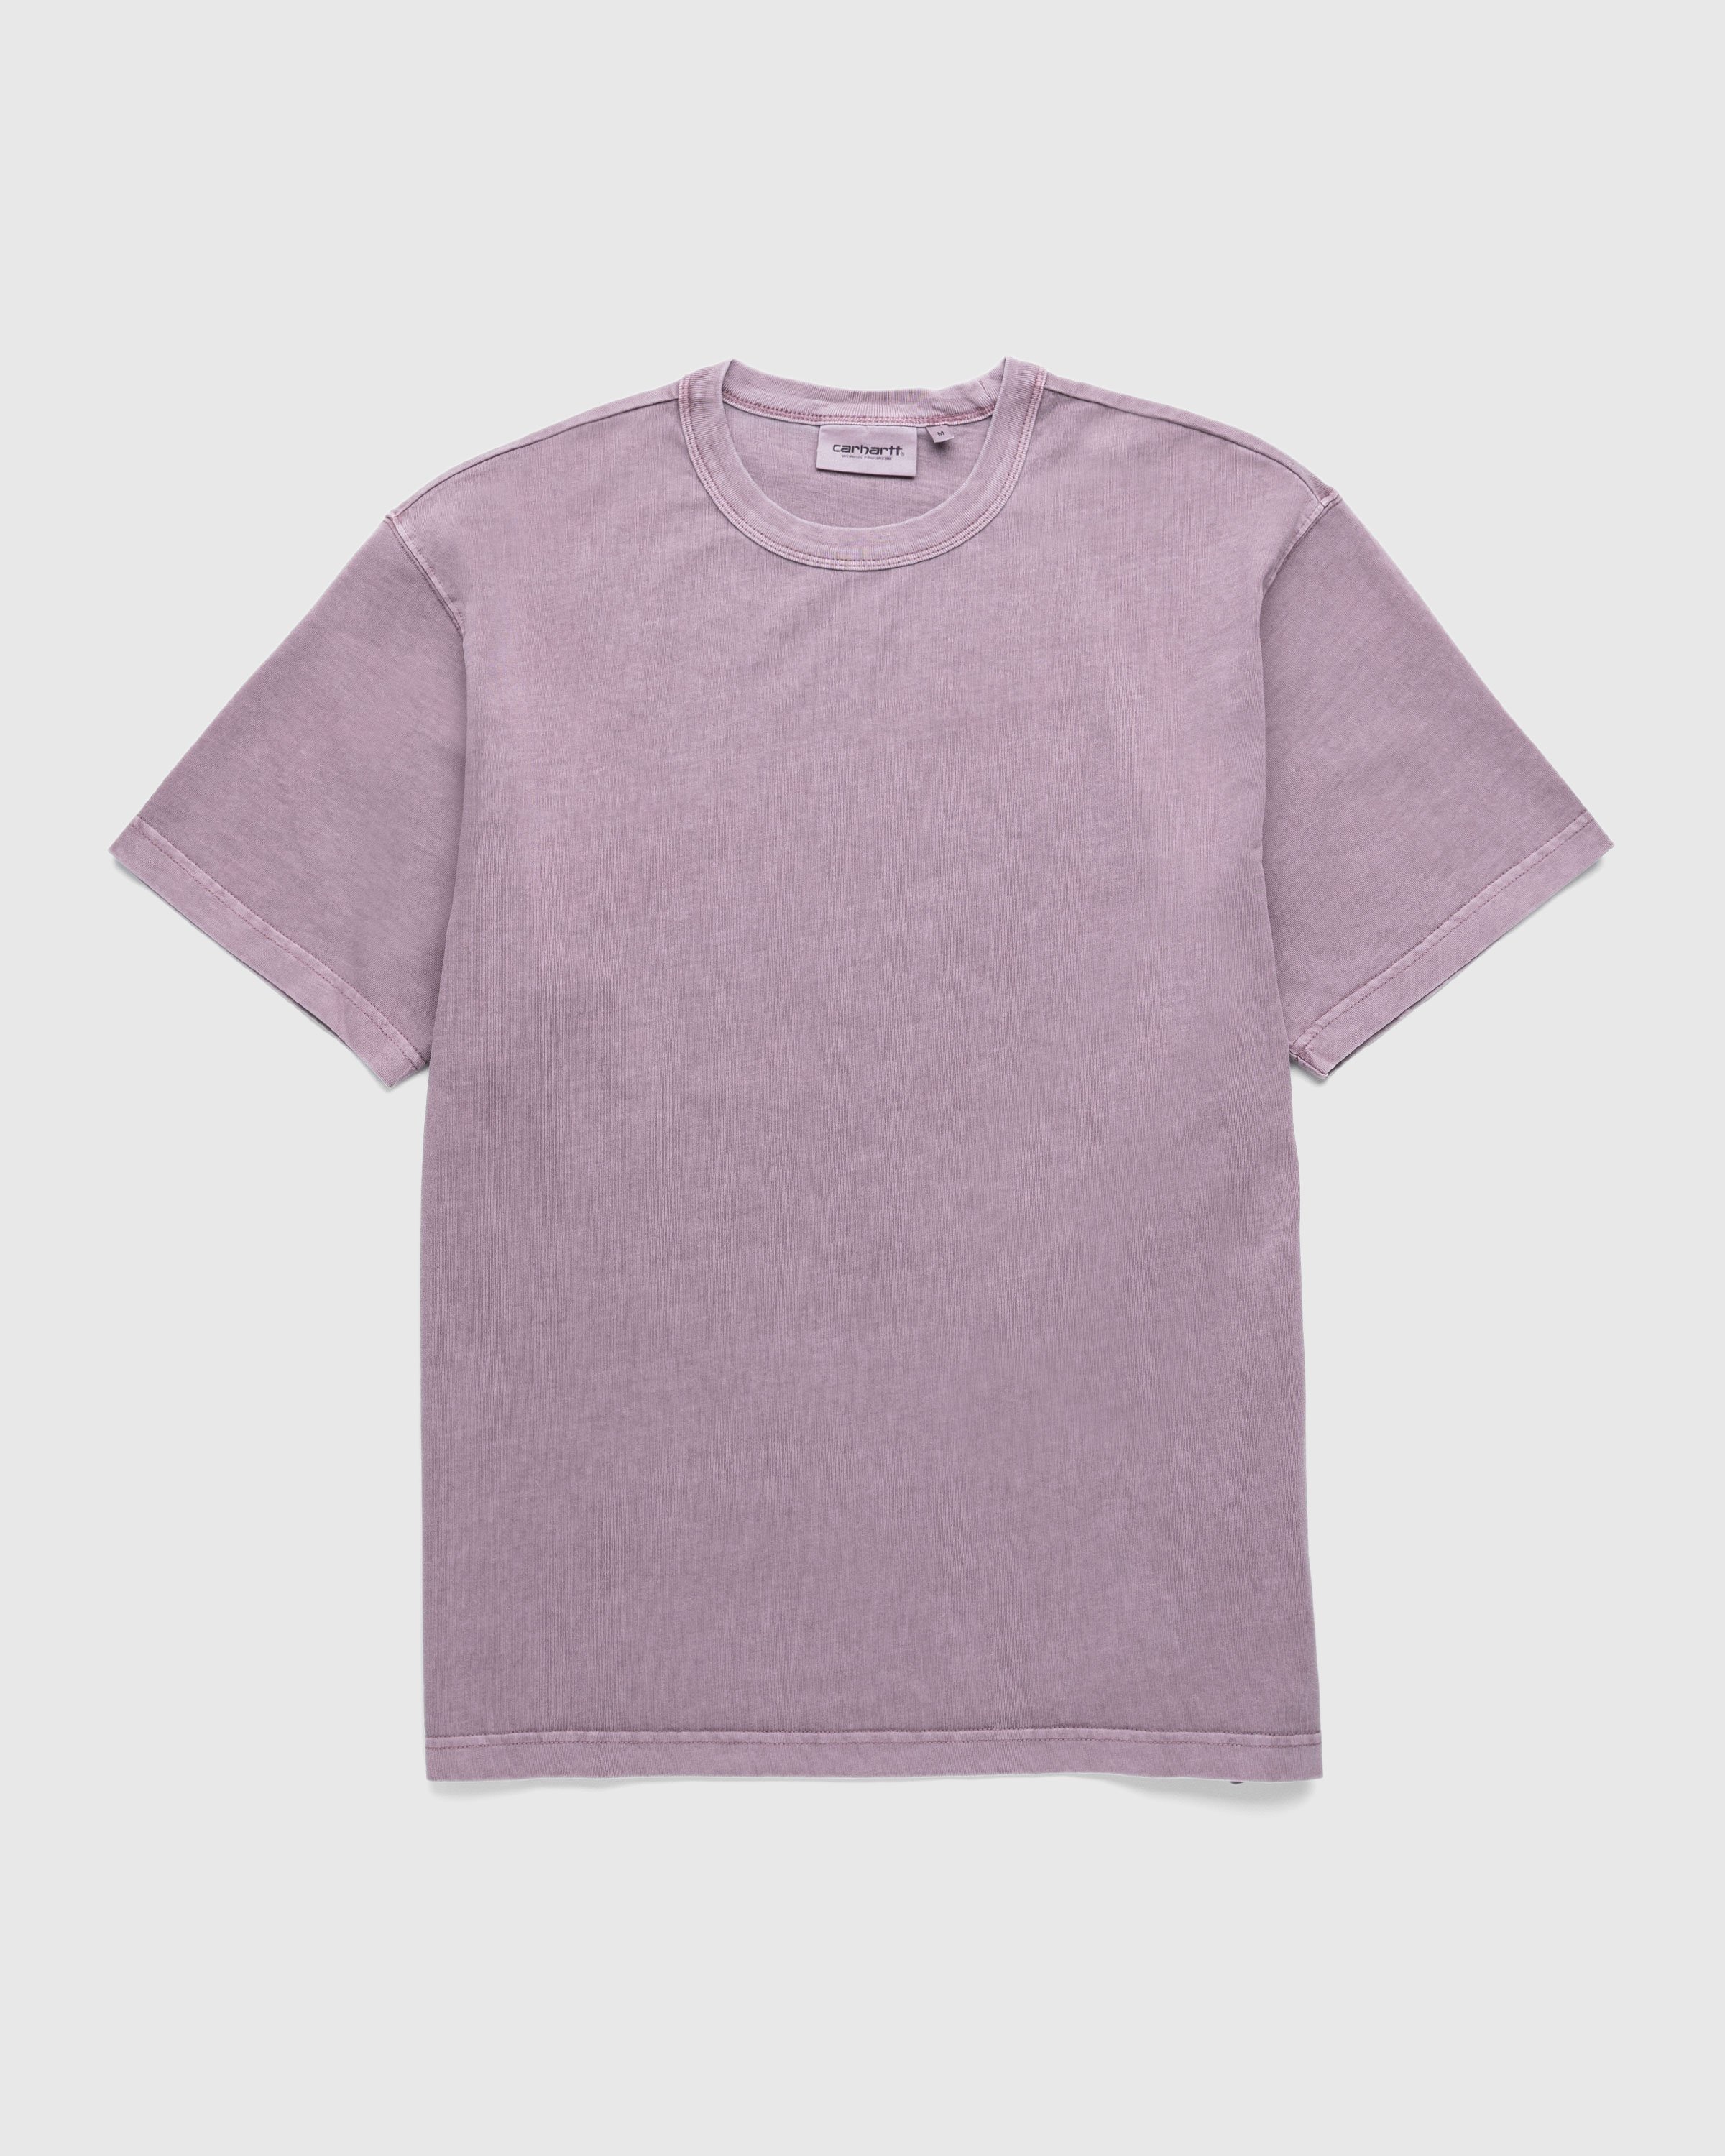 Carhartt WIP - S/S Taos T-Shirt Daphne/Garment-Dyed - Clothing - Blue - Image 1